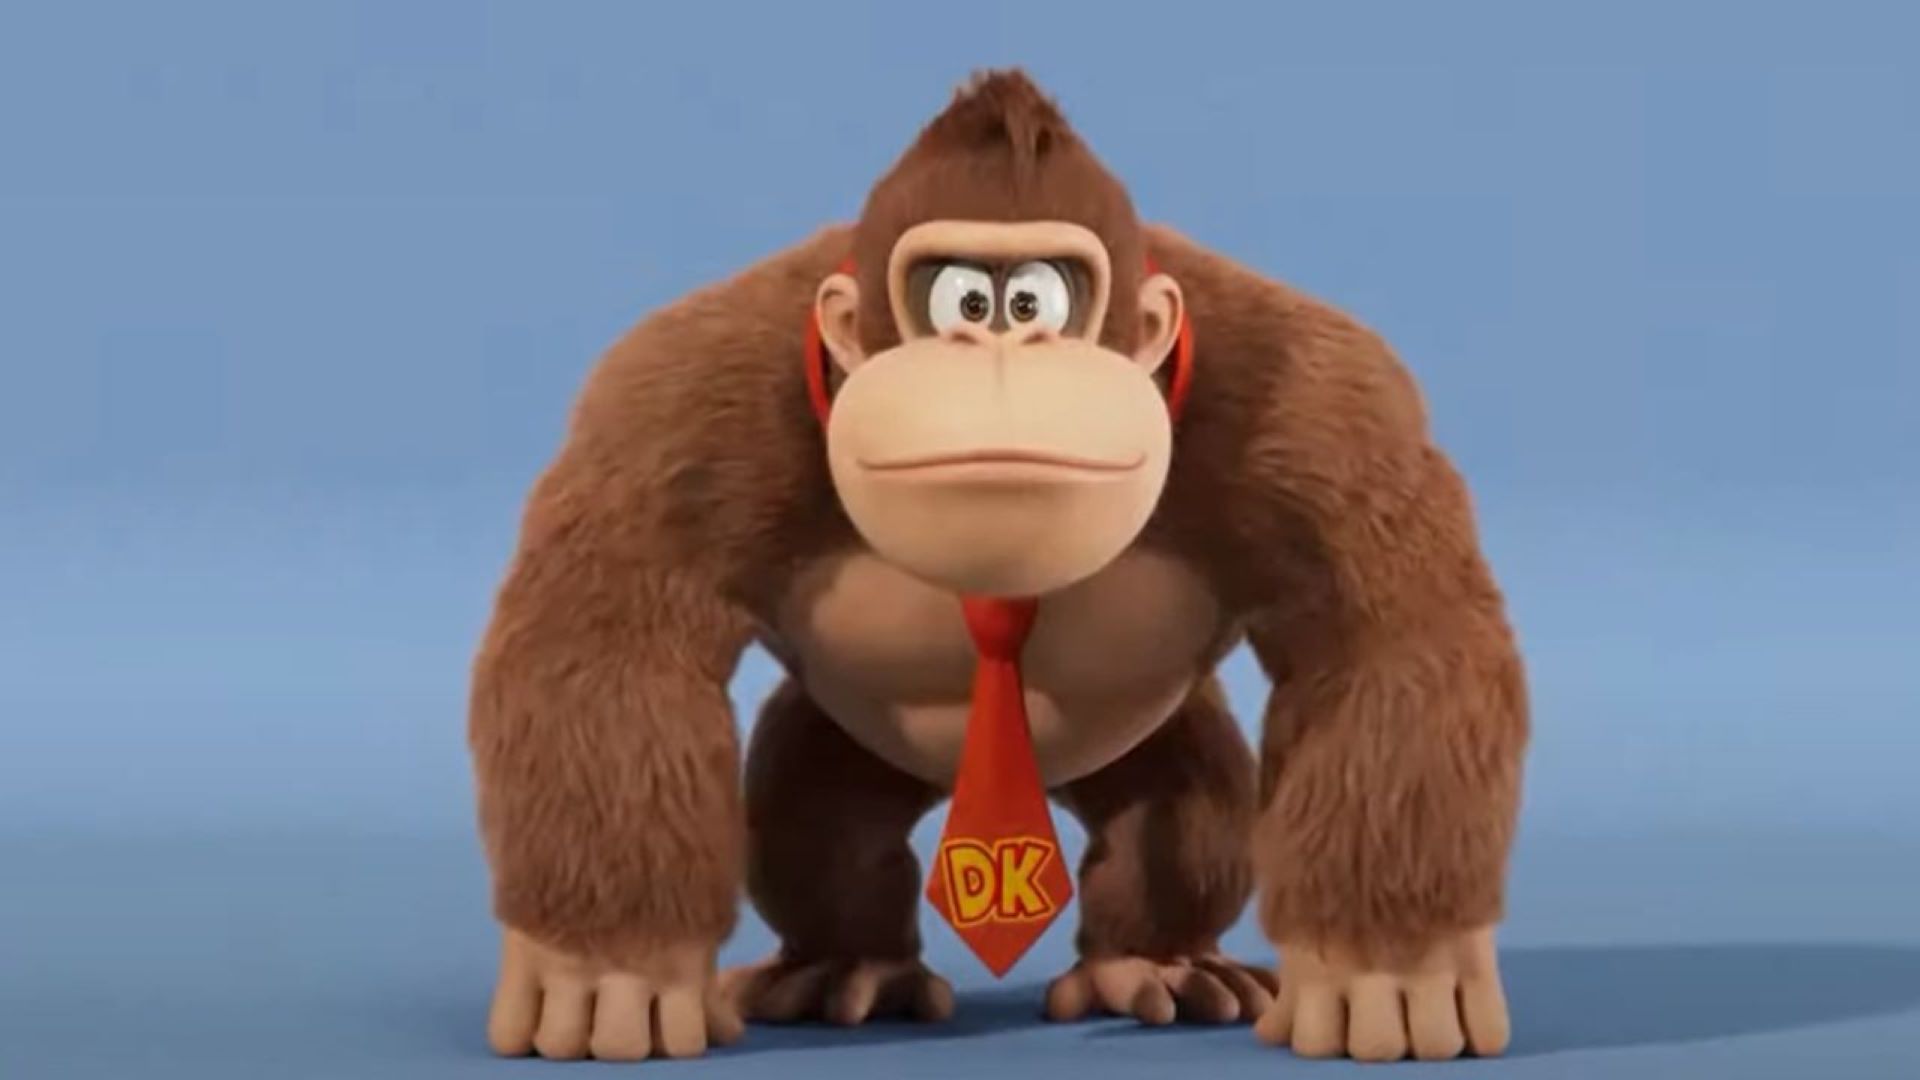 Supper Mario Broth - Photo of Shigeru Miyamoto with a Donkey Kong